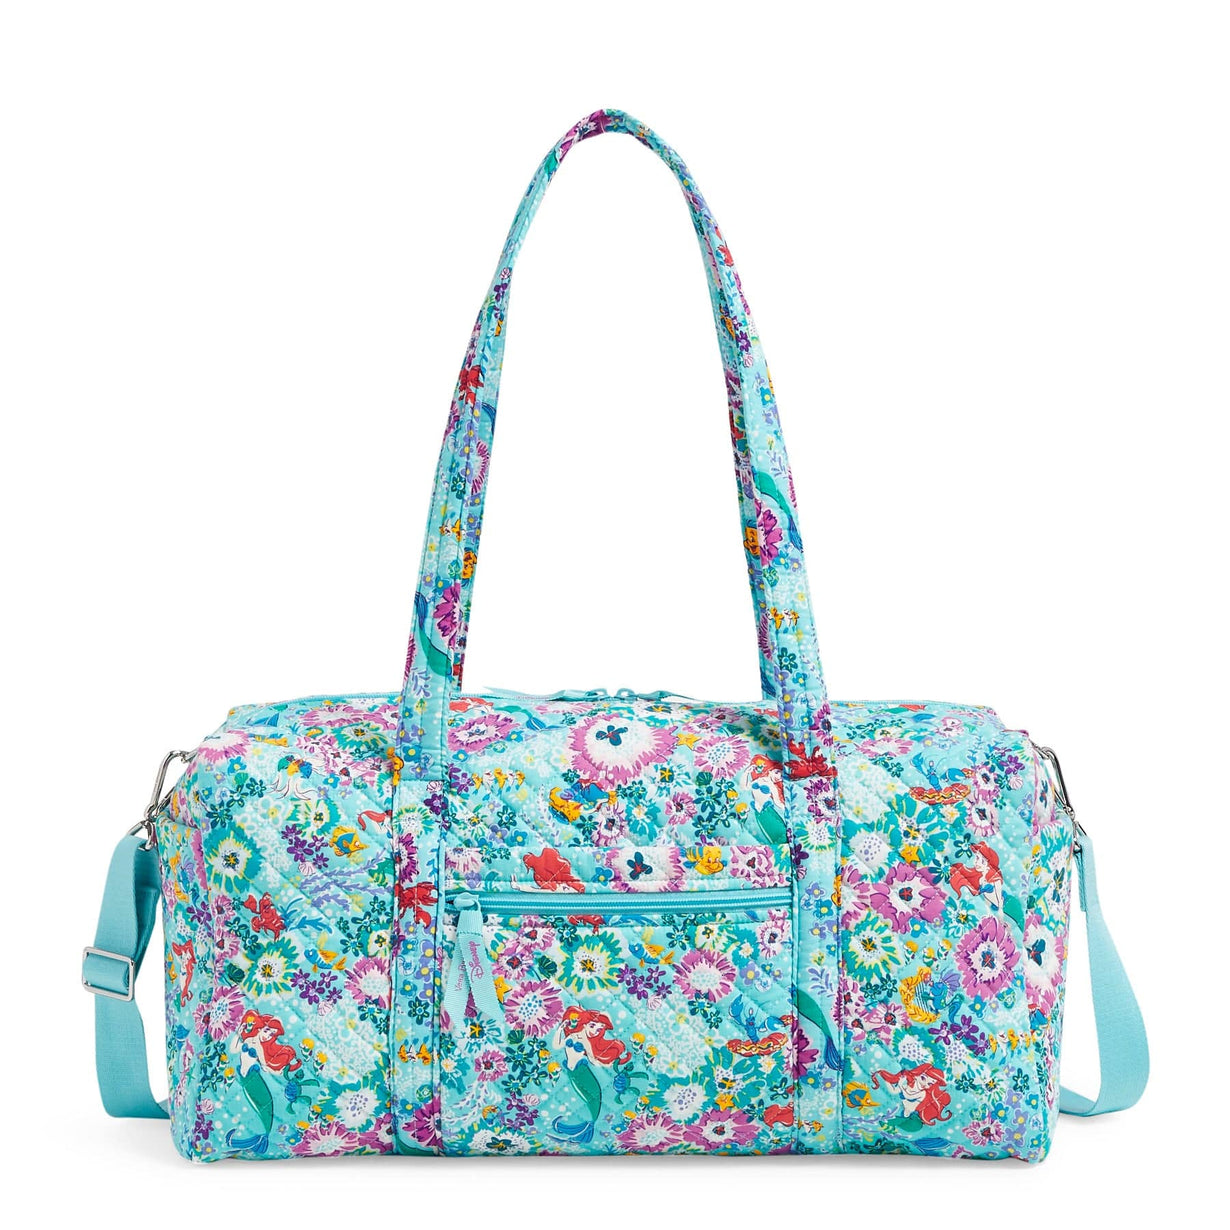 Vera Bradley duffle bag - Women's handbags